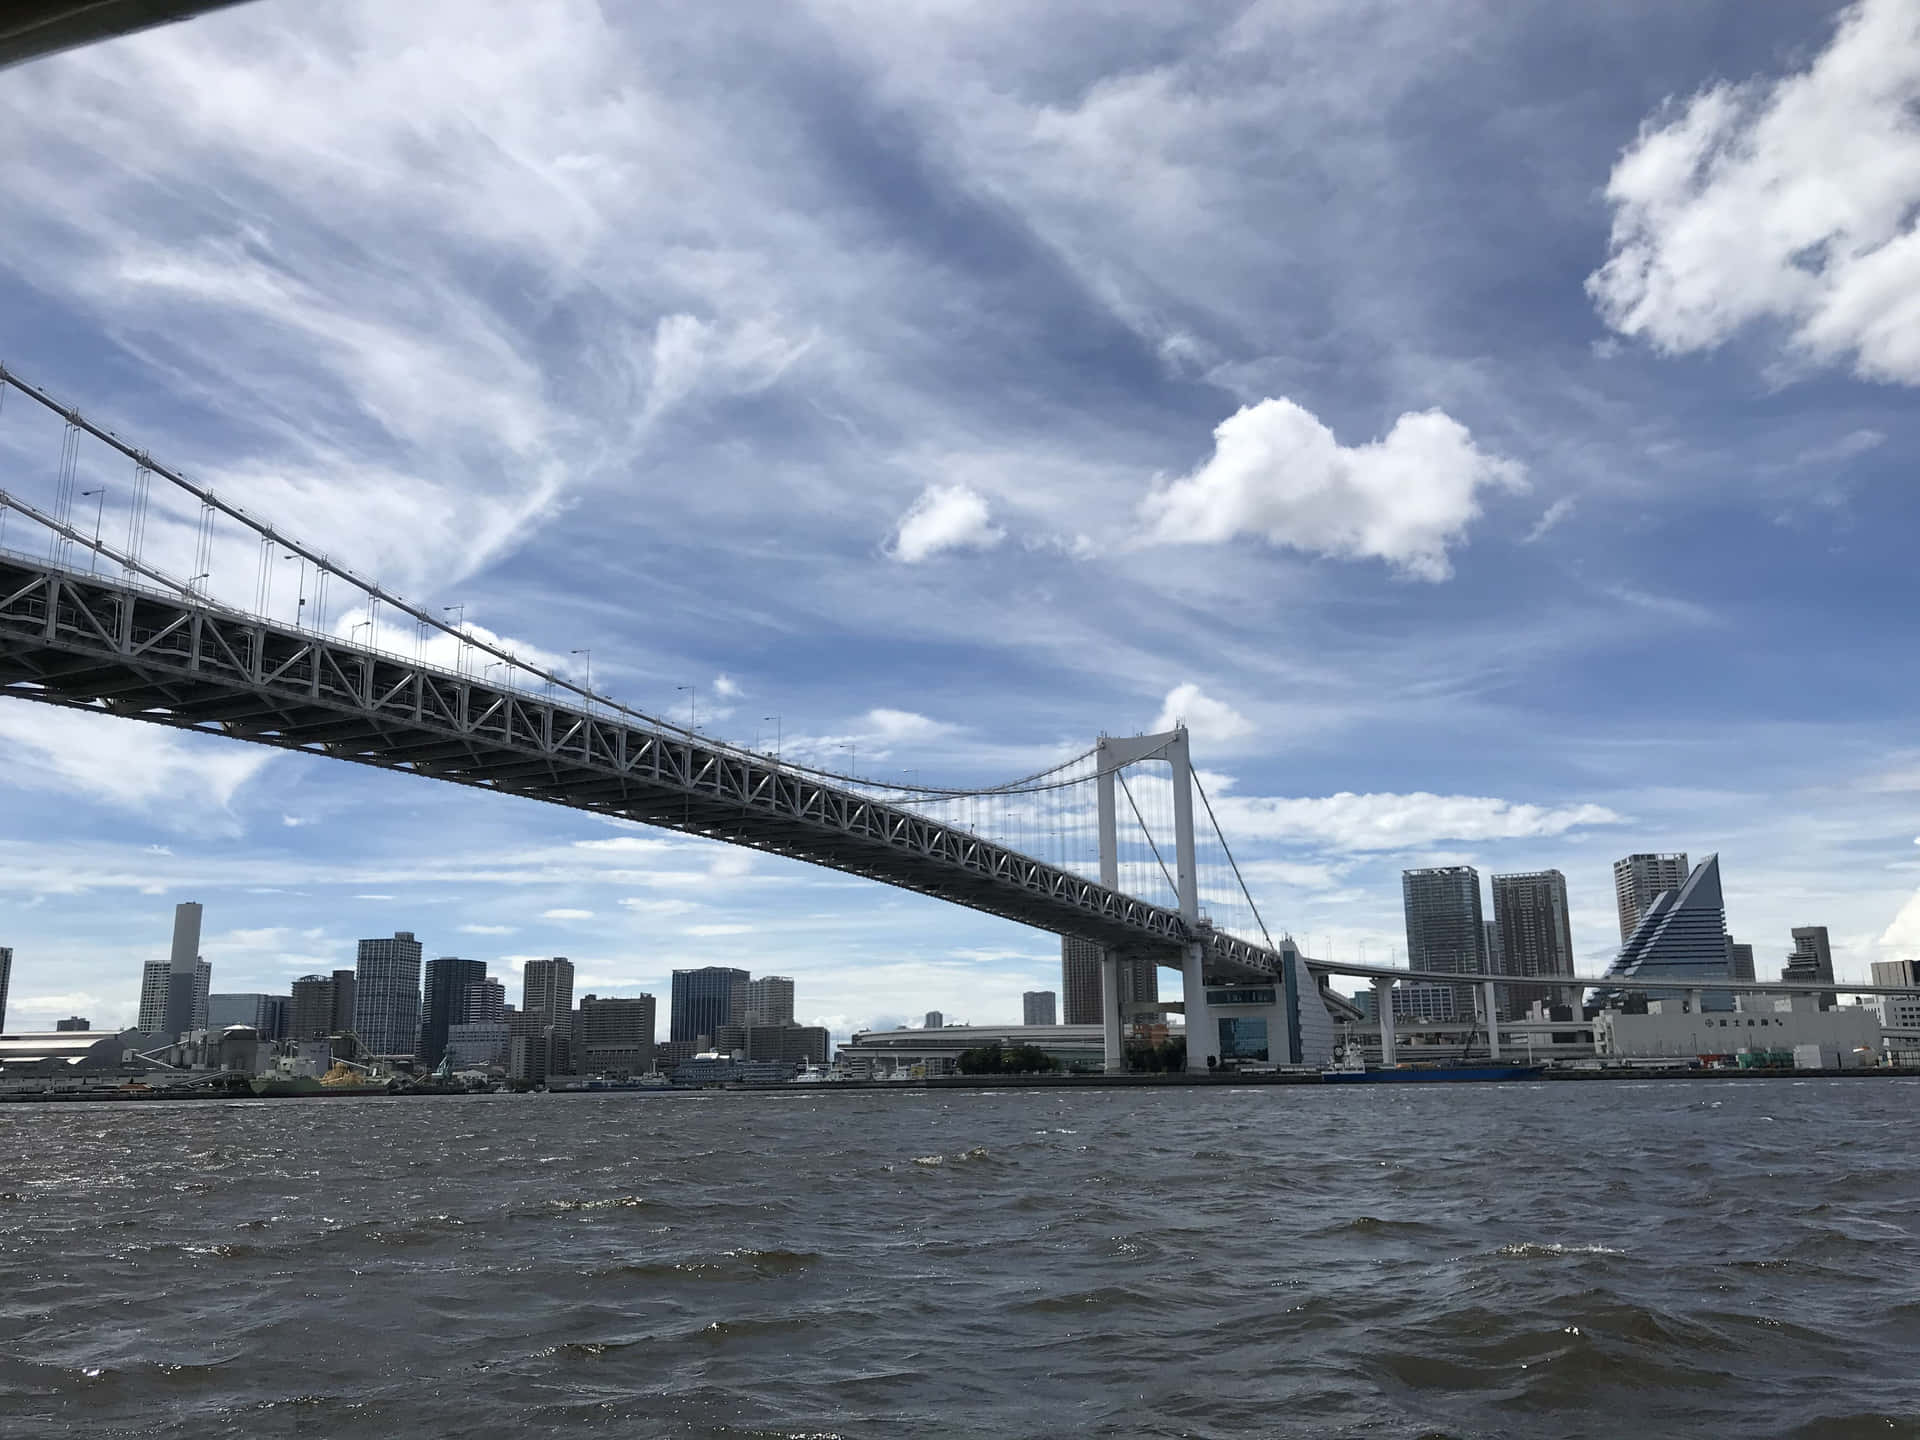 The refulgent Rainbow Bridge spanning the heavens above Japan's Lake Akashi